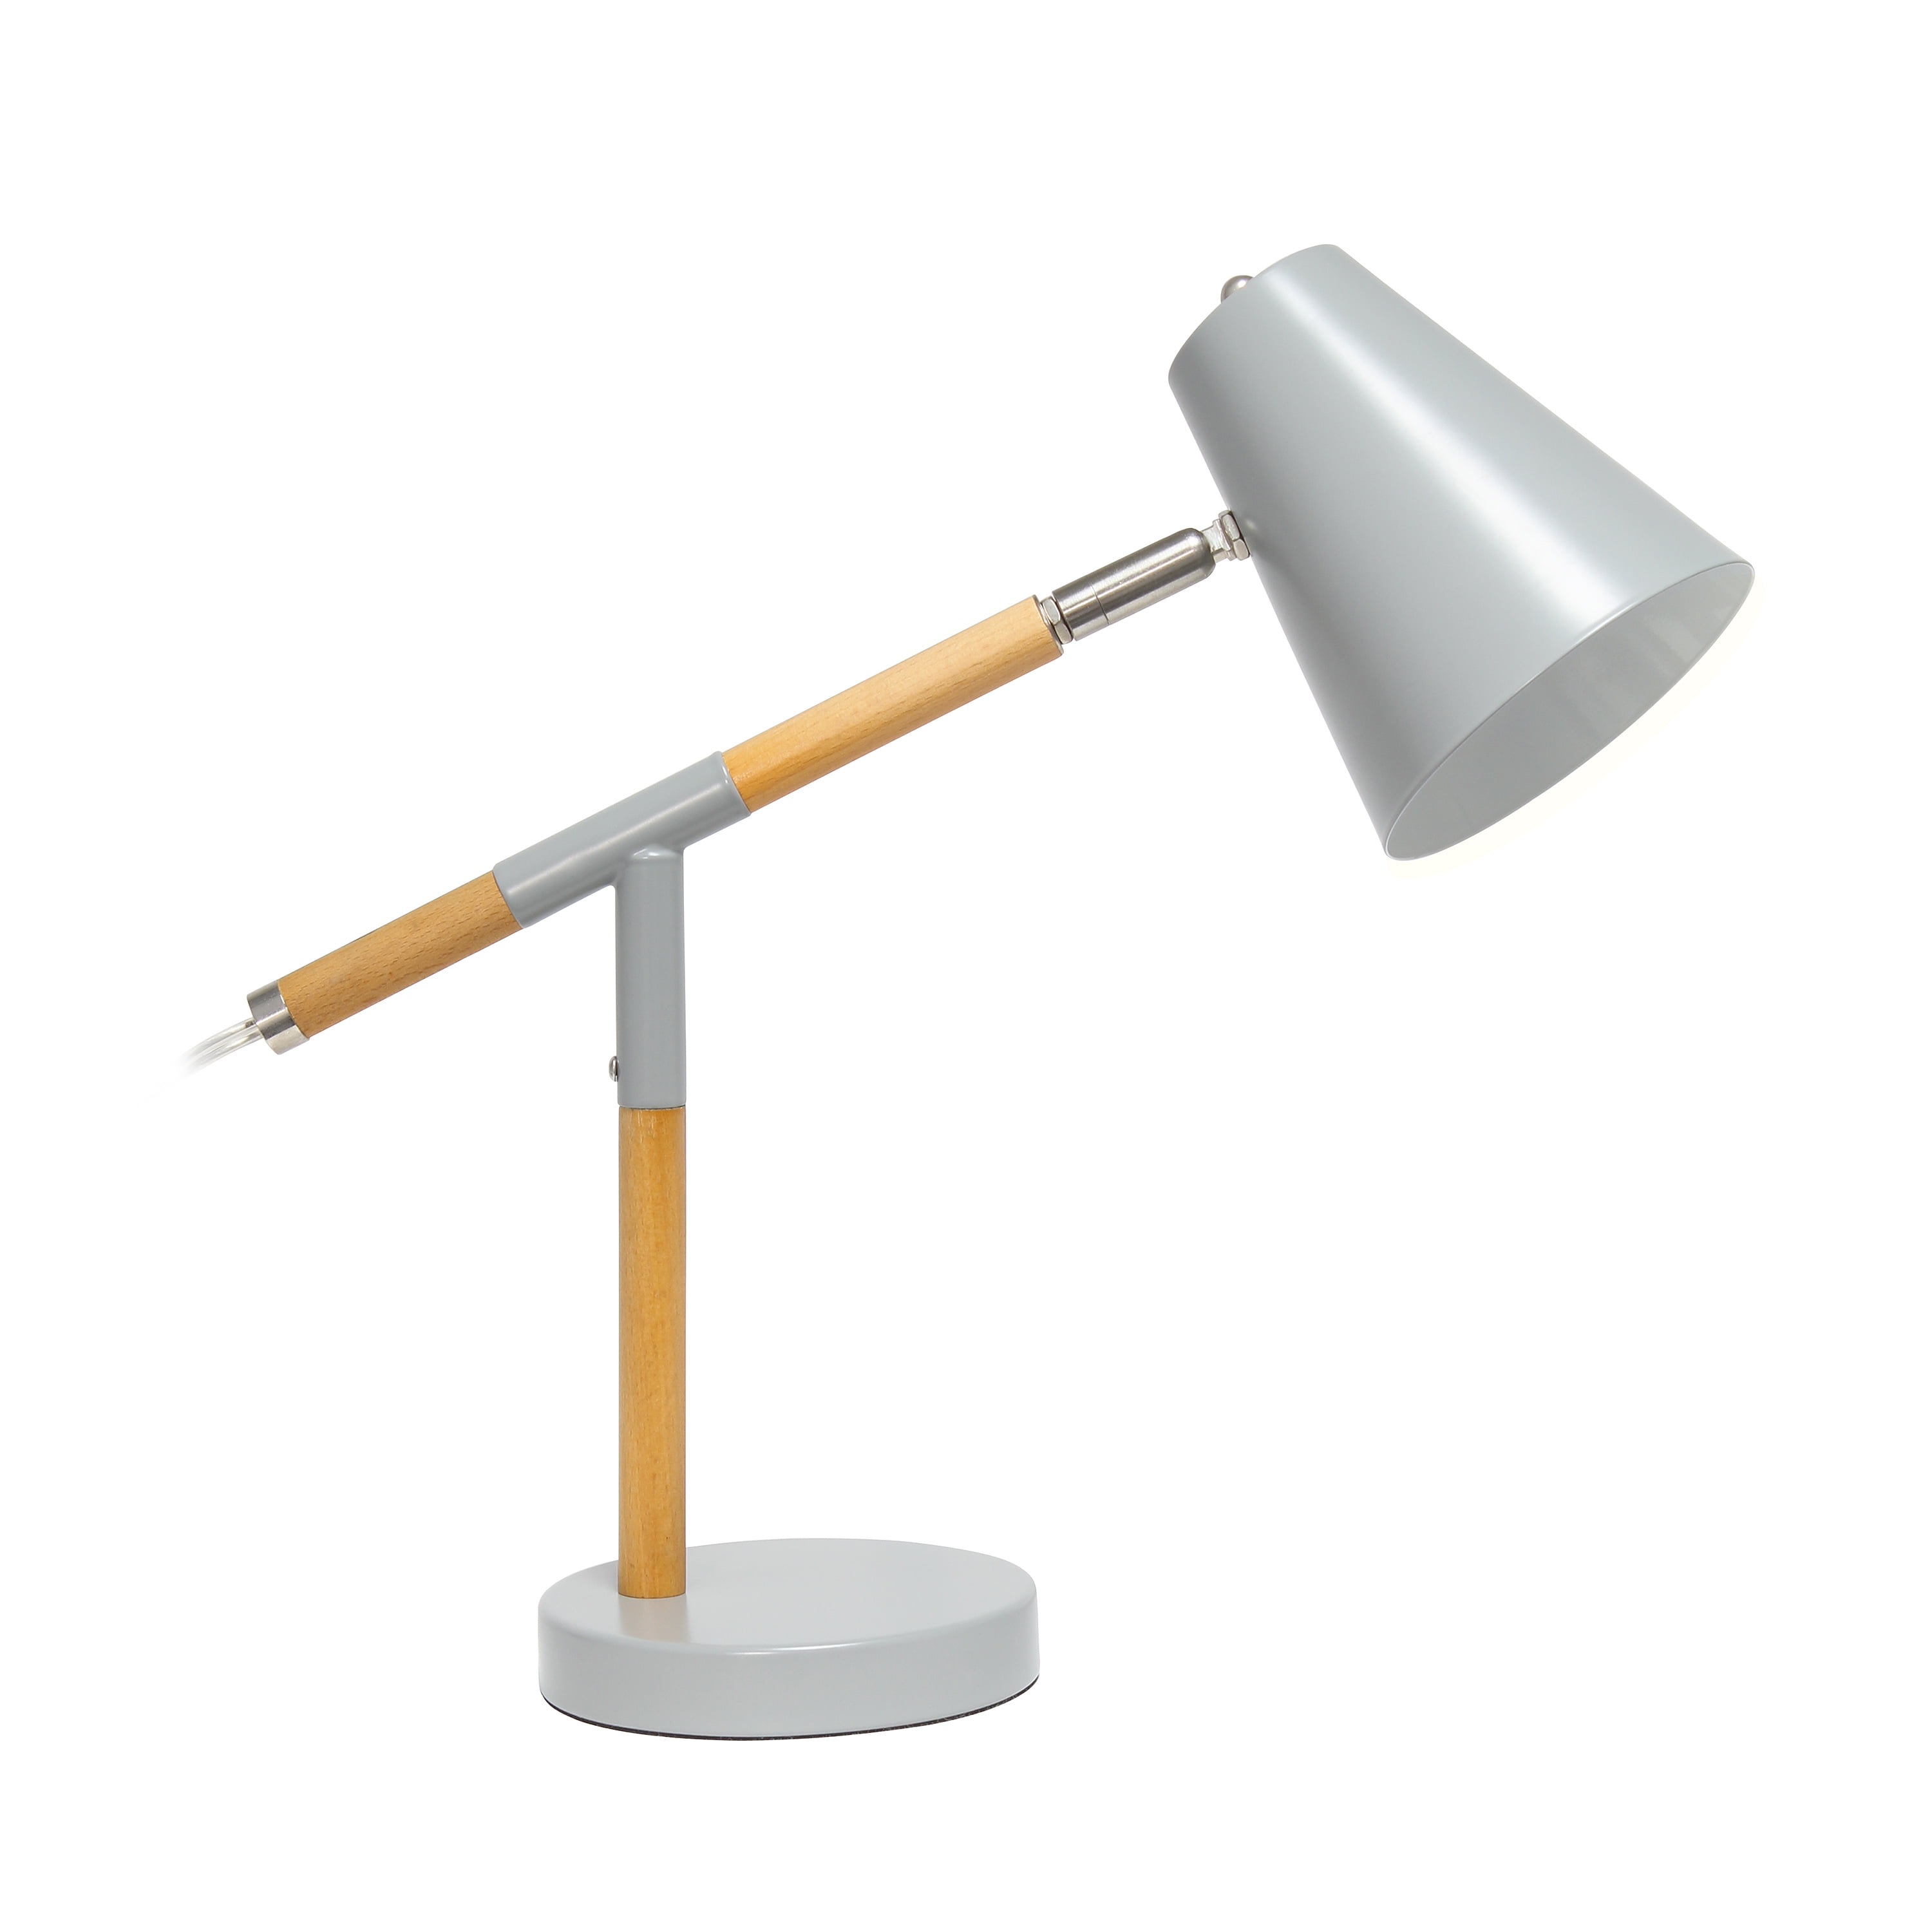  Simple  Designs Matte and Wooden Pivot Desk  Lamp  Walmart com Walmart com